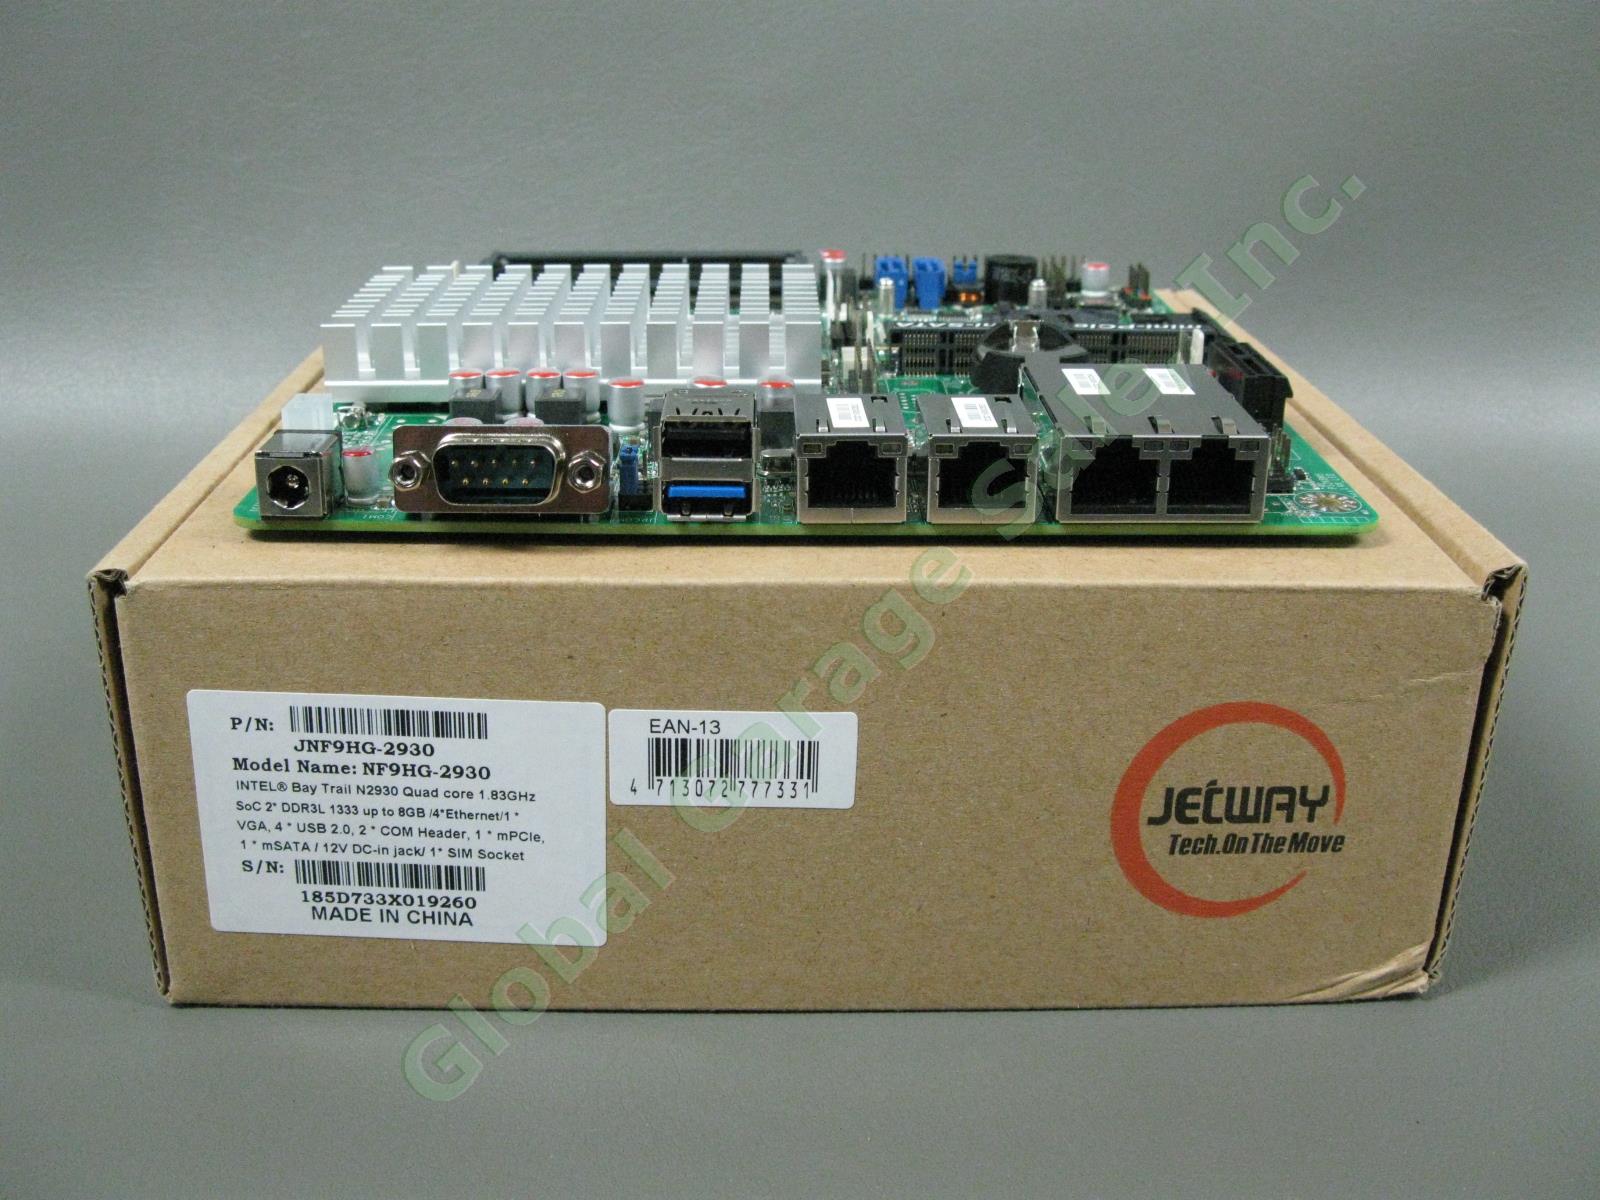 5 Jetway NF9HG-2930 Intel Quad Core LAN Thin Mini-ITX Networking Motherboard